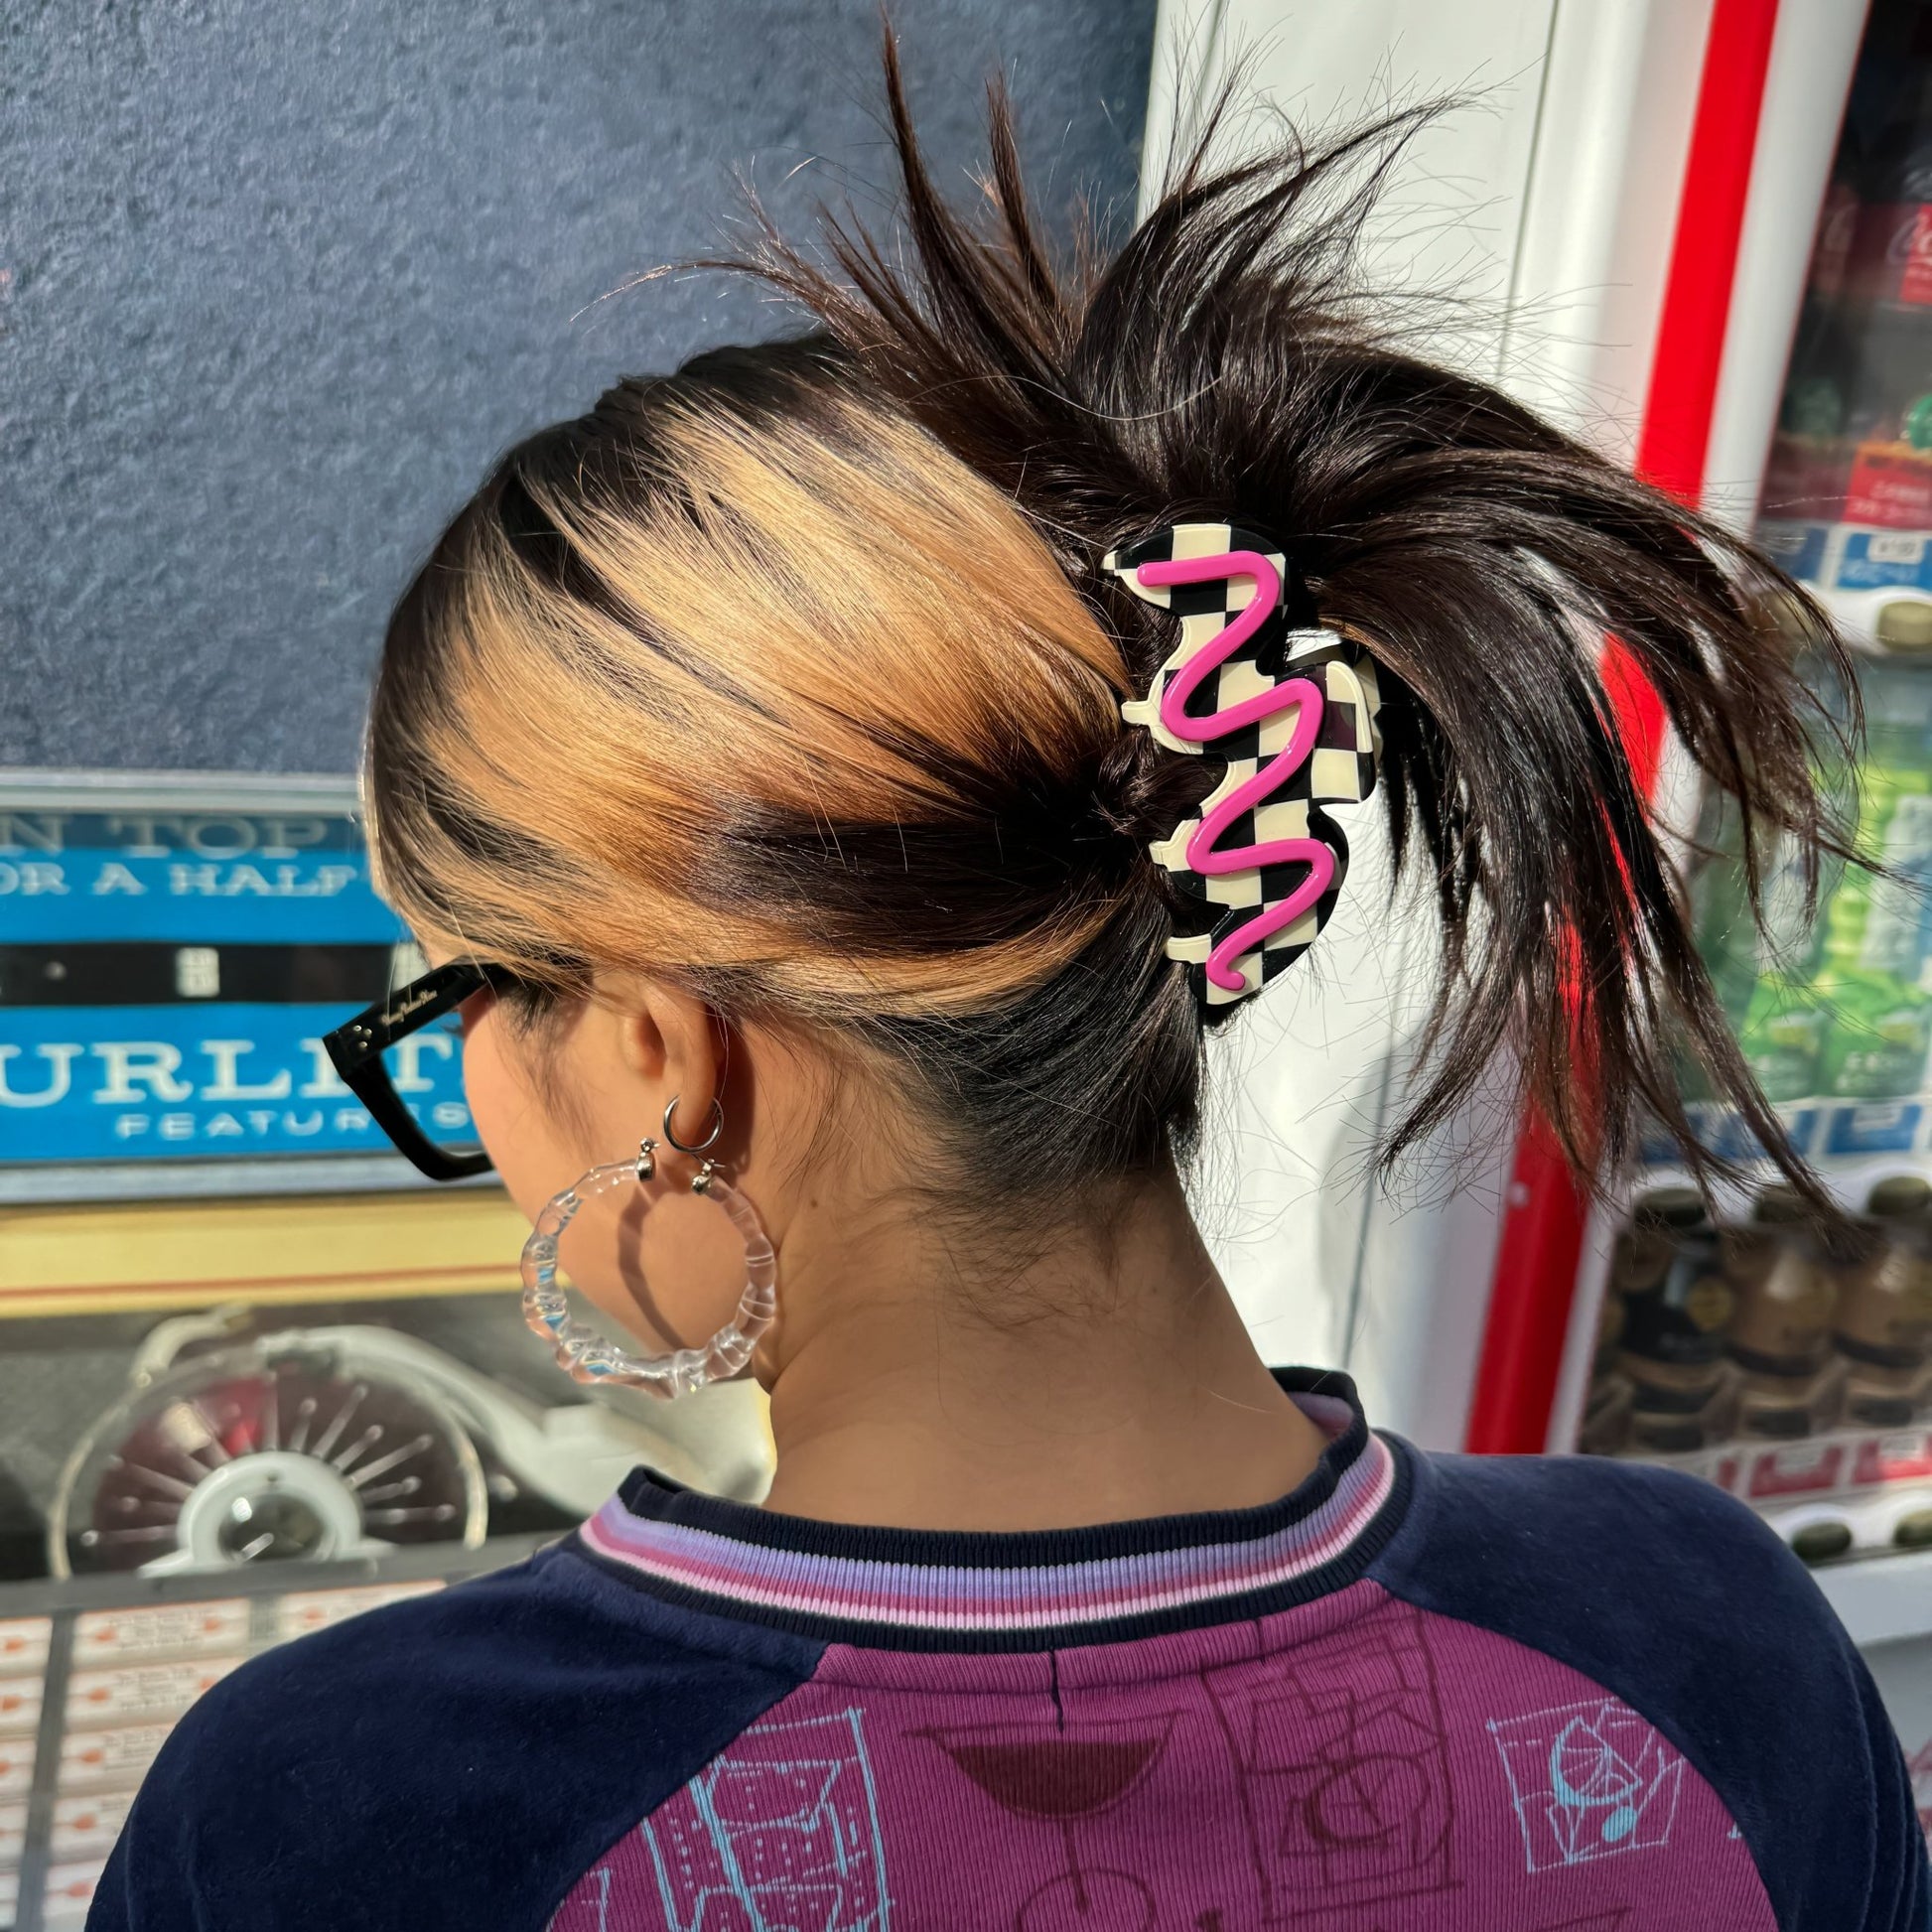 Wave hair clip - 𝐇𝐨𝐧𝐞𝐲 𝐁𝐮𝐭𝐭𝐞𝐫 𝐍𝐢𝐧𝐞